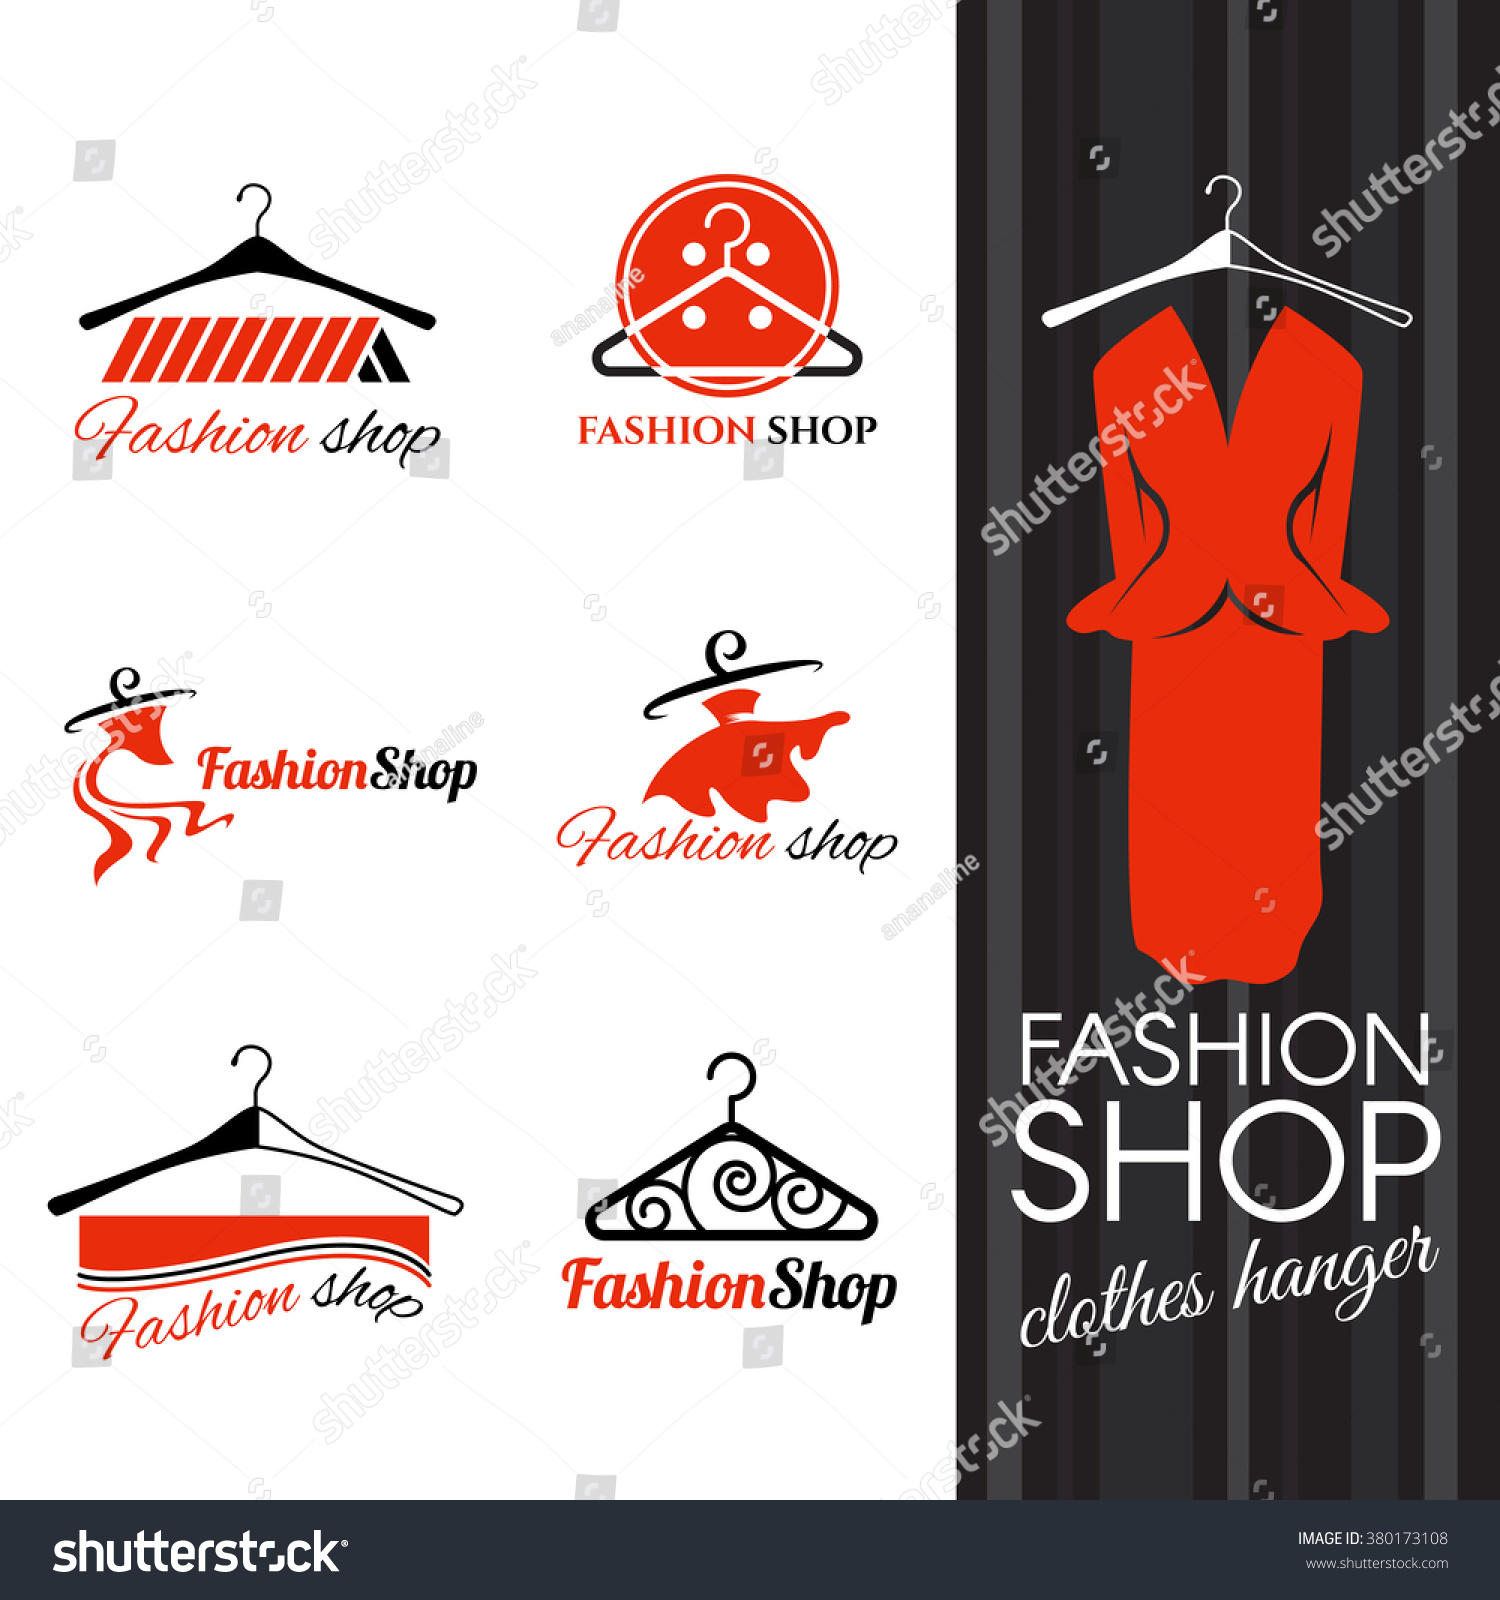 Fashion Shop Logo - Clothes Hanger And Studs Dress Vector Design ...